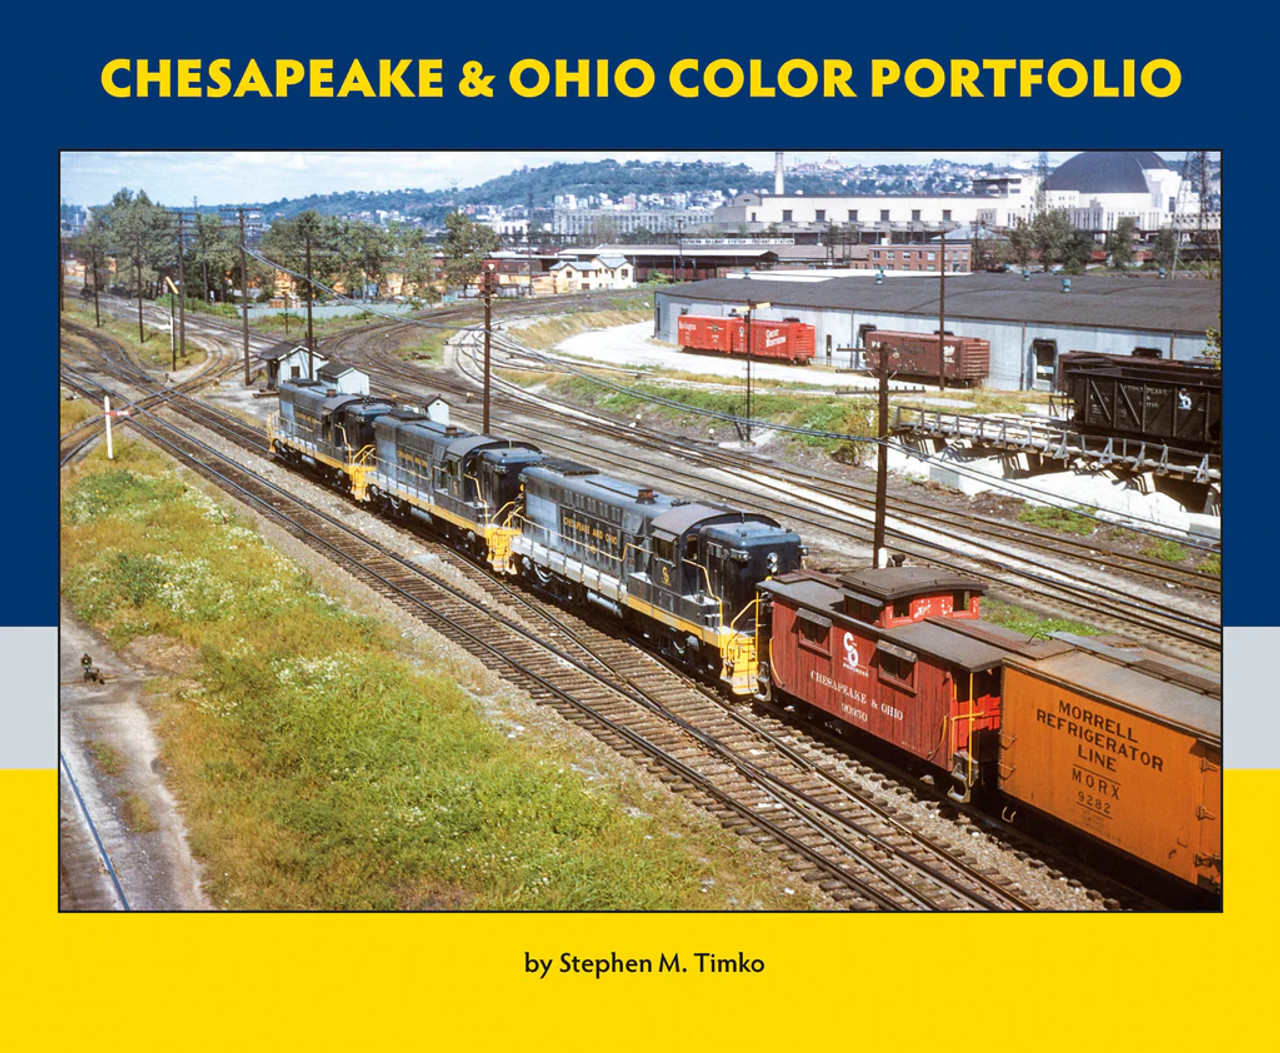 Morning Sun 7979 Chesapeake & Ohio Color Portfolio (Softcover)